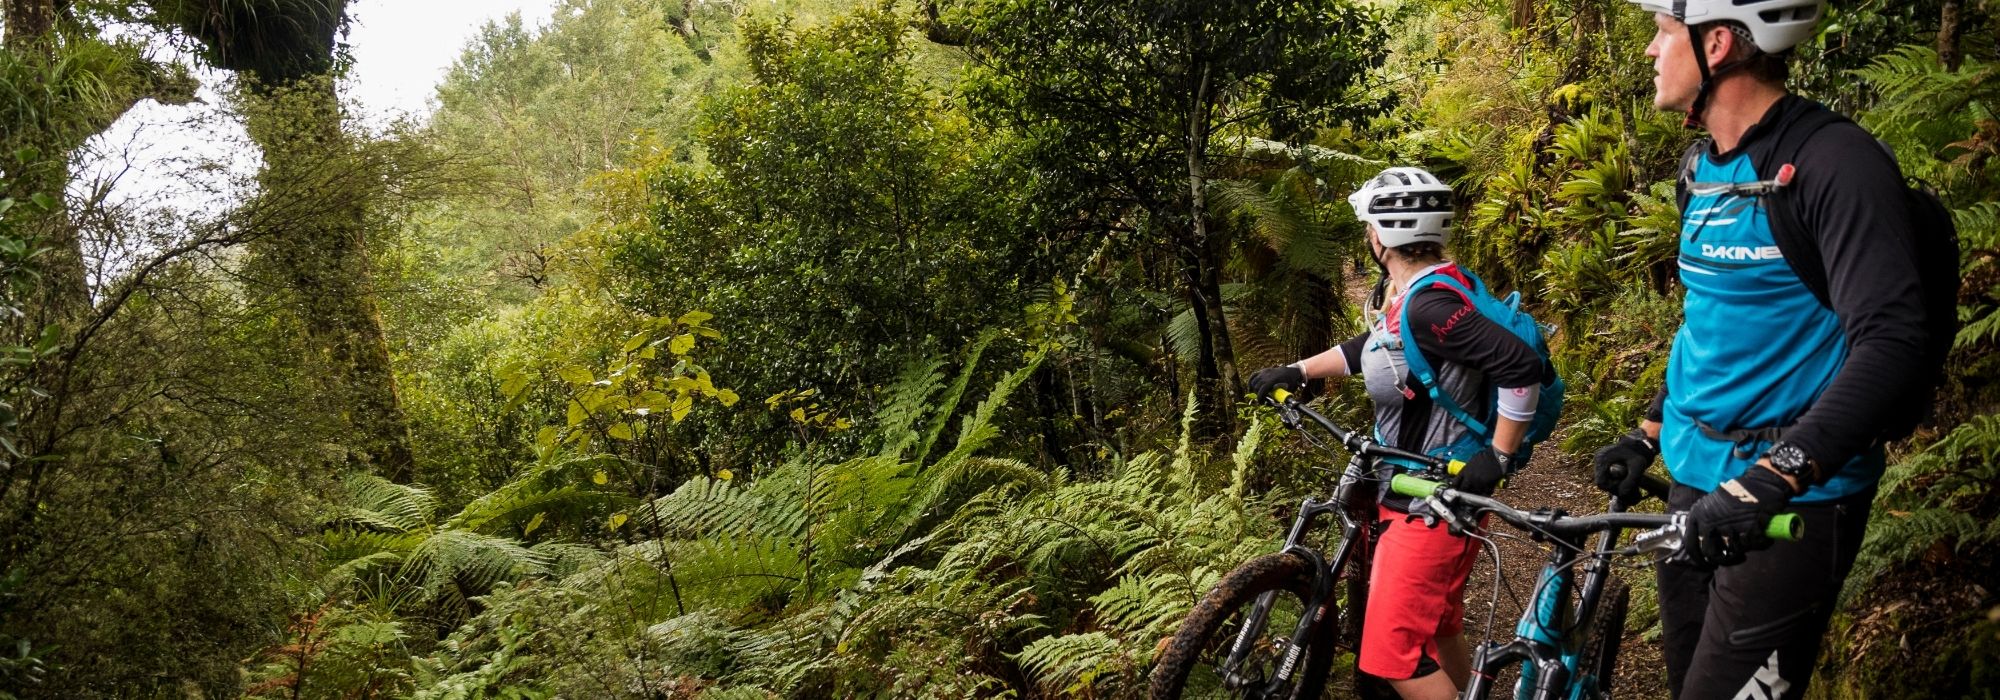 Mountain bike trail lowdown: Find your perfect match